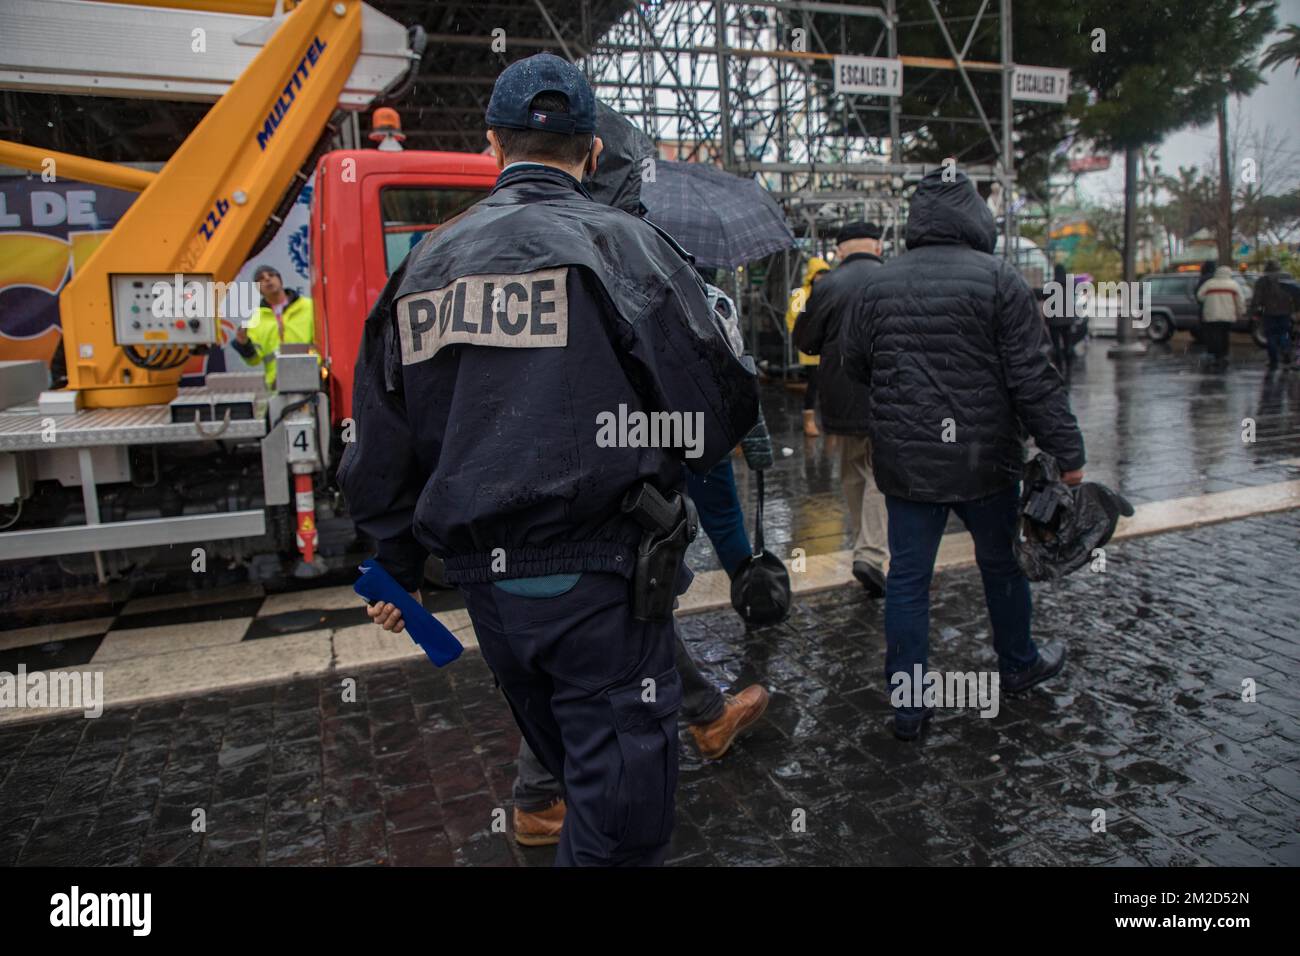 Agenti di polizia incaricati della sicurezza al Carnevale di Nizza. | Politiers en charge de la sécurité du Carnaval de Nice. 17/02/2018 Foto Stock